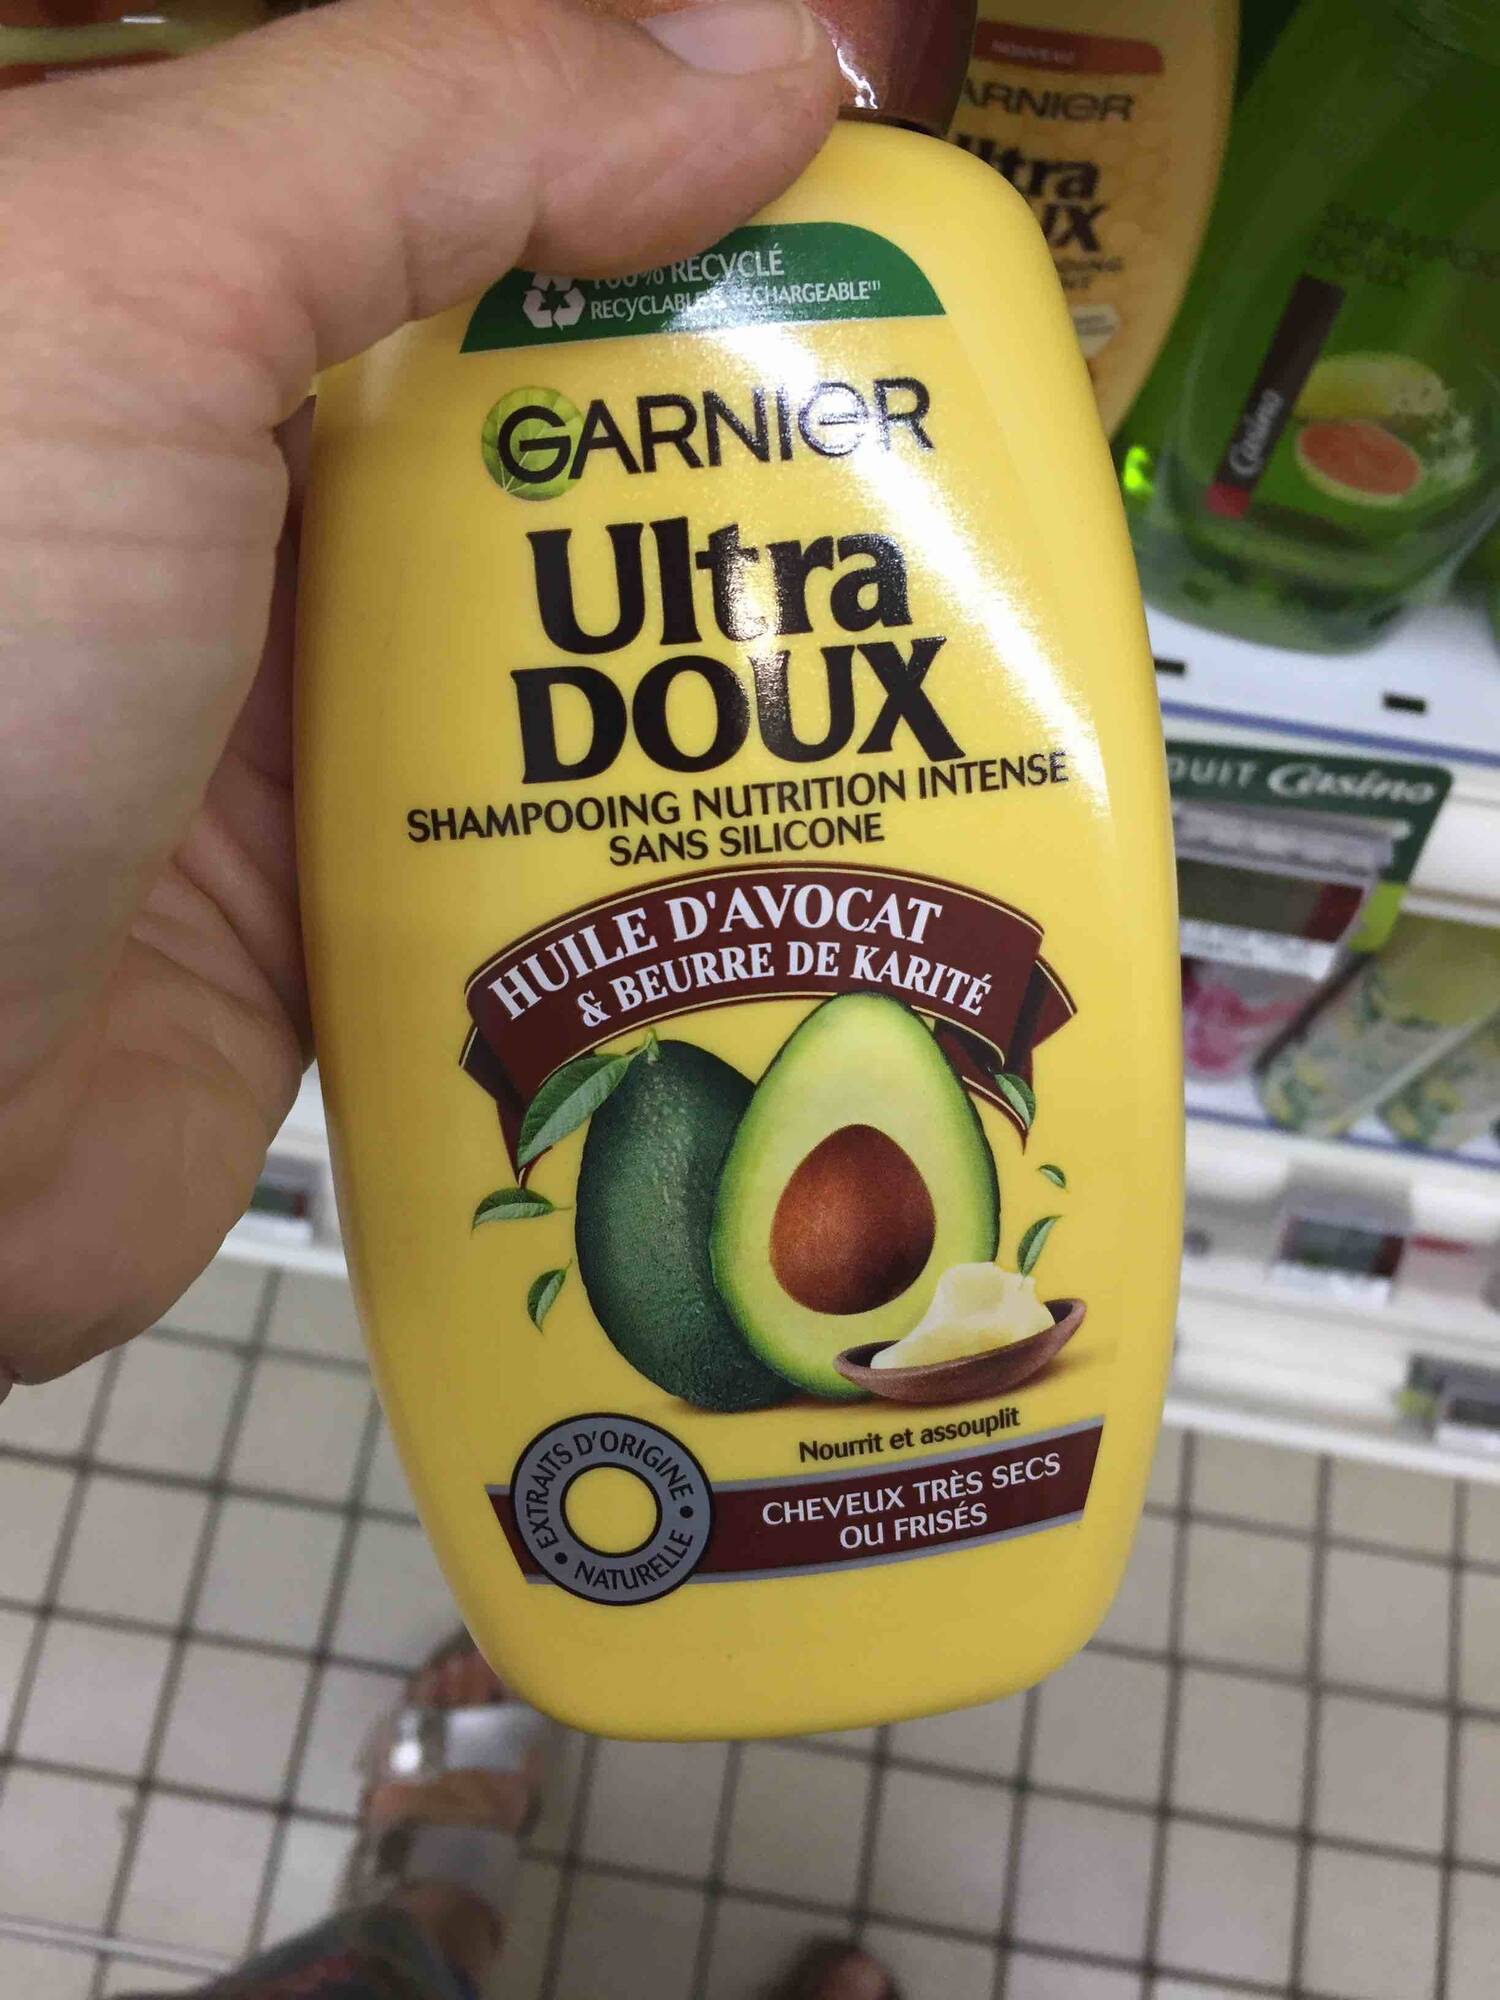 GARNIER - Ultra doux Huile d'Avocat & Beurre de Karité - Shampooing nutrititive intense